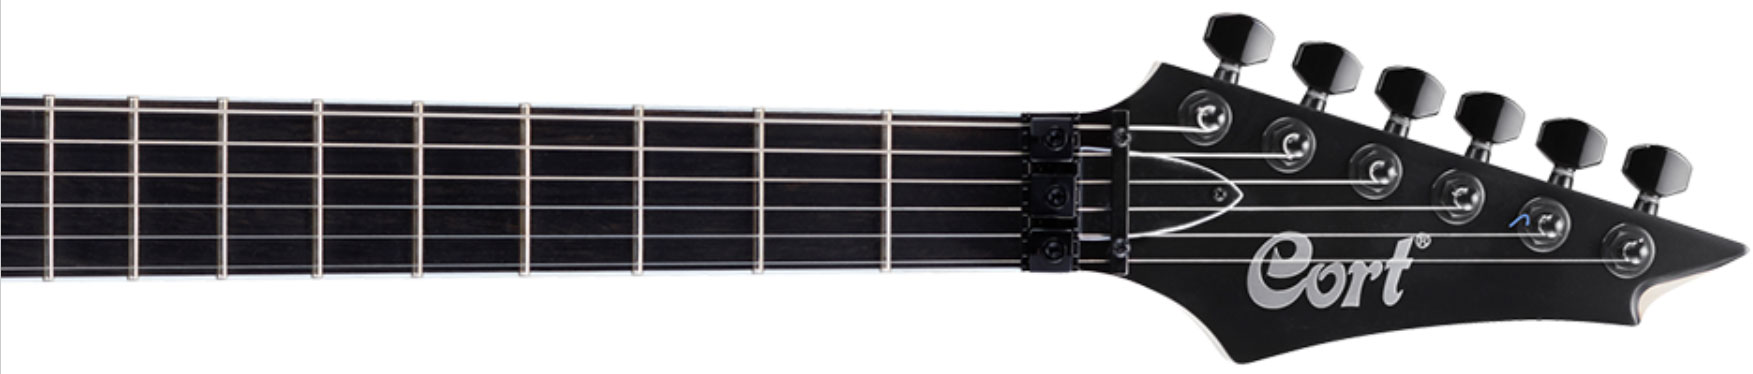 Cort X500 Fr Hh Eb - Open Pore Jean Burst - Str shape electric guitar - Variation 2